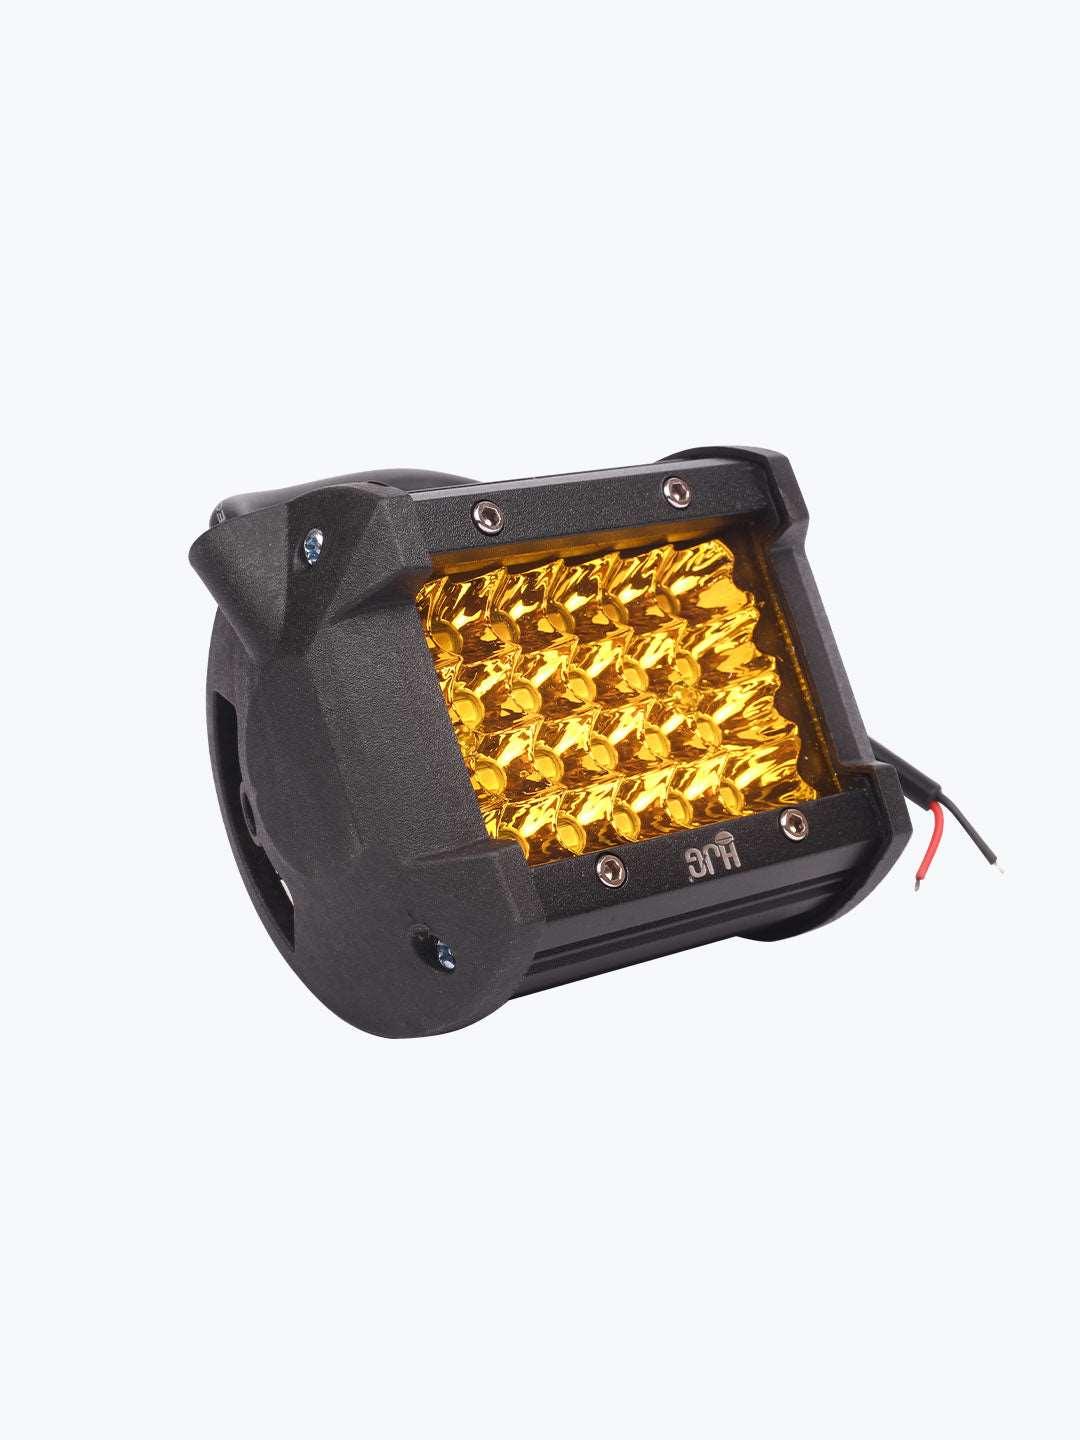 24 LED Yellow Square Foglight - Moto Modz